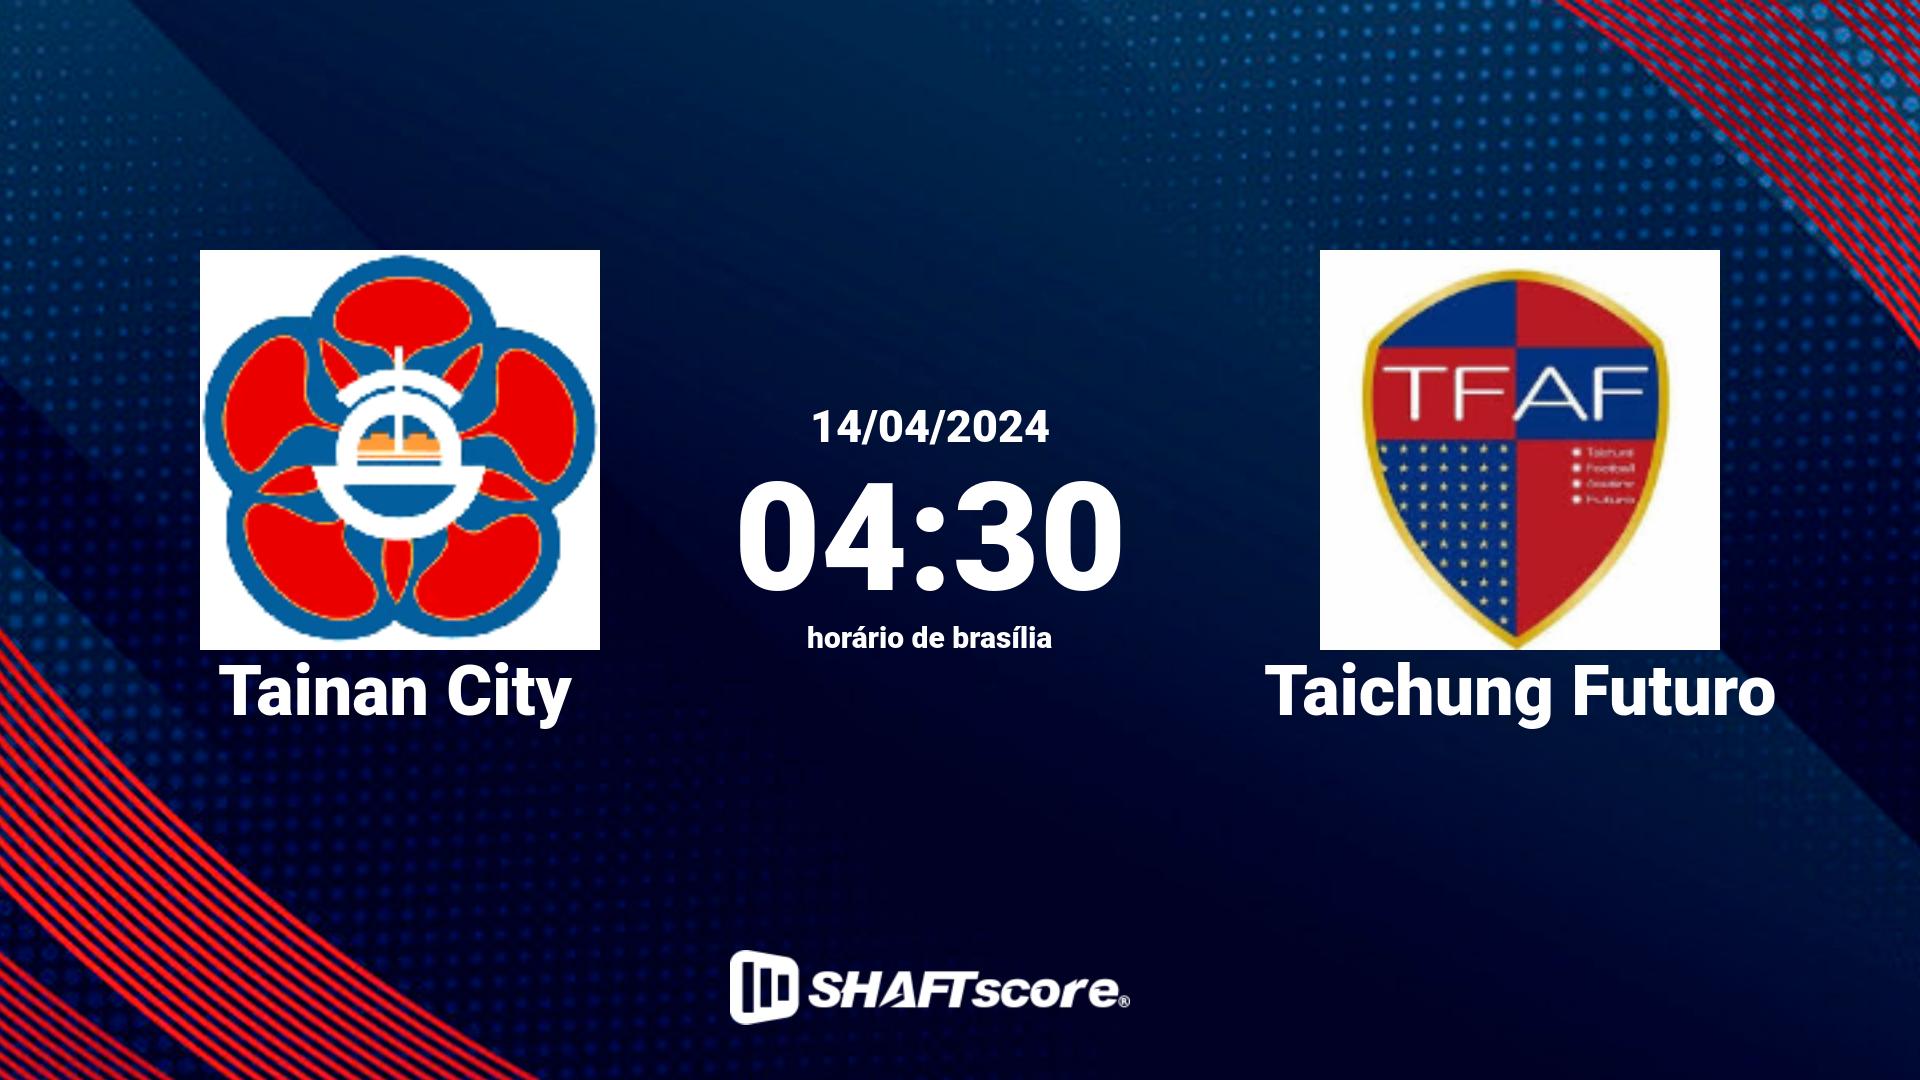 Estatísticas do jogo Tainan City vs Taichung Futuro 14.04 04:30